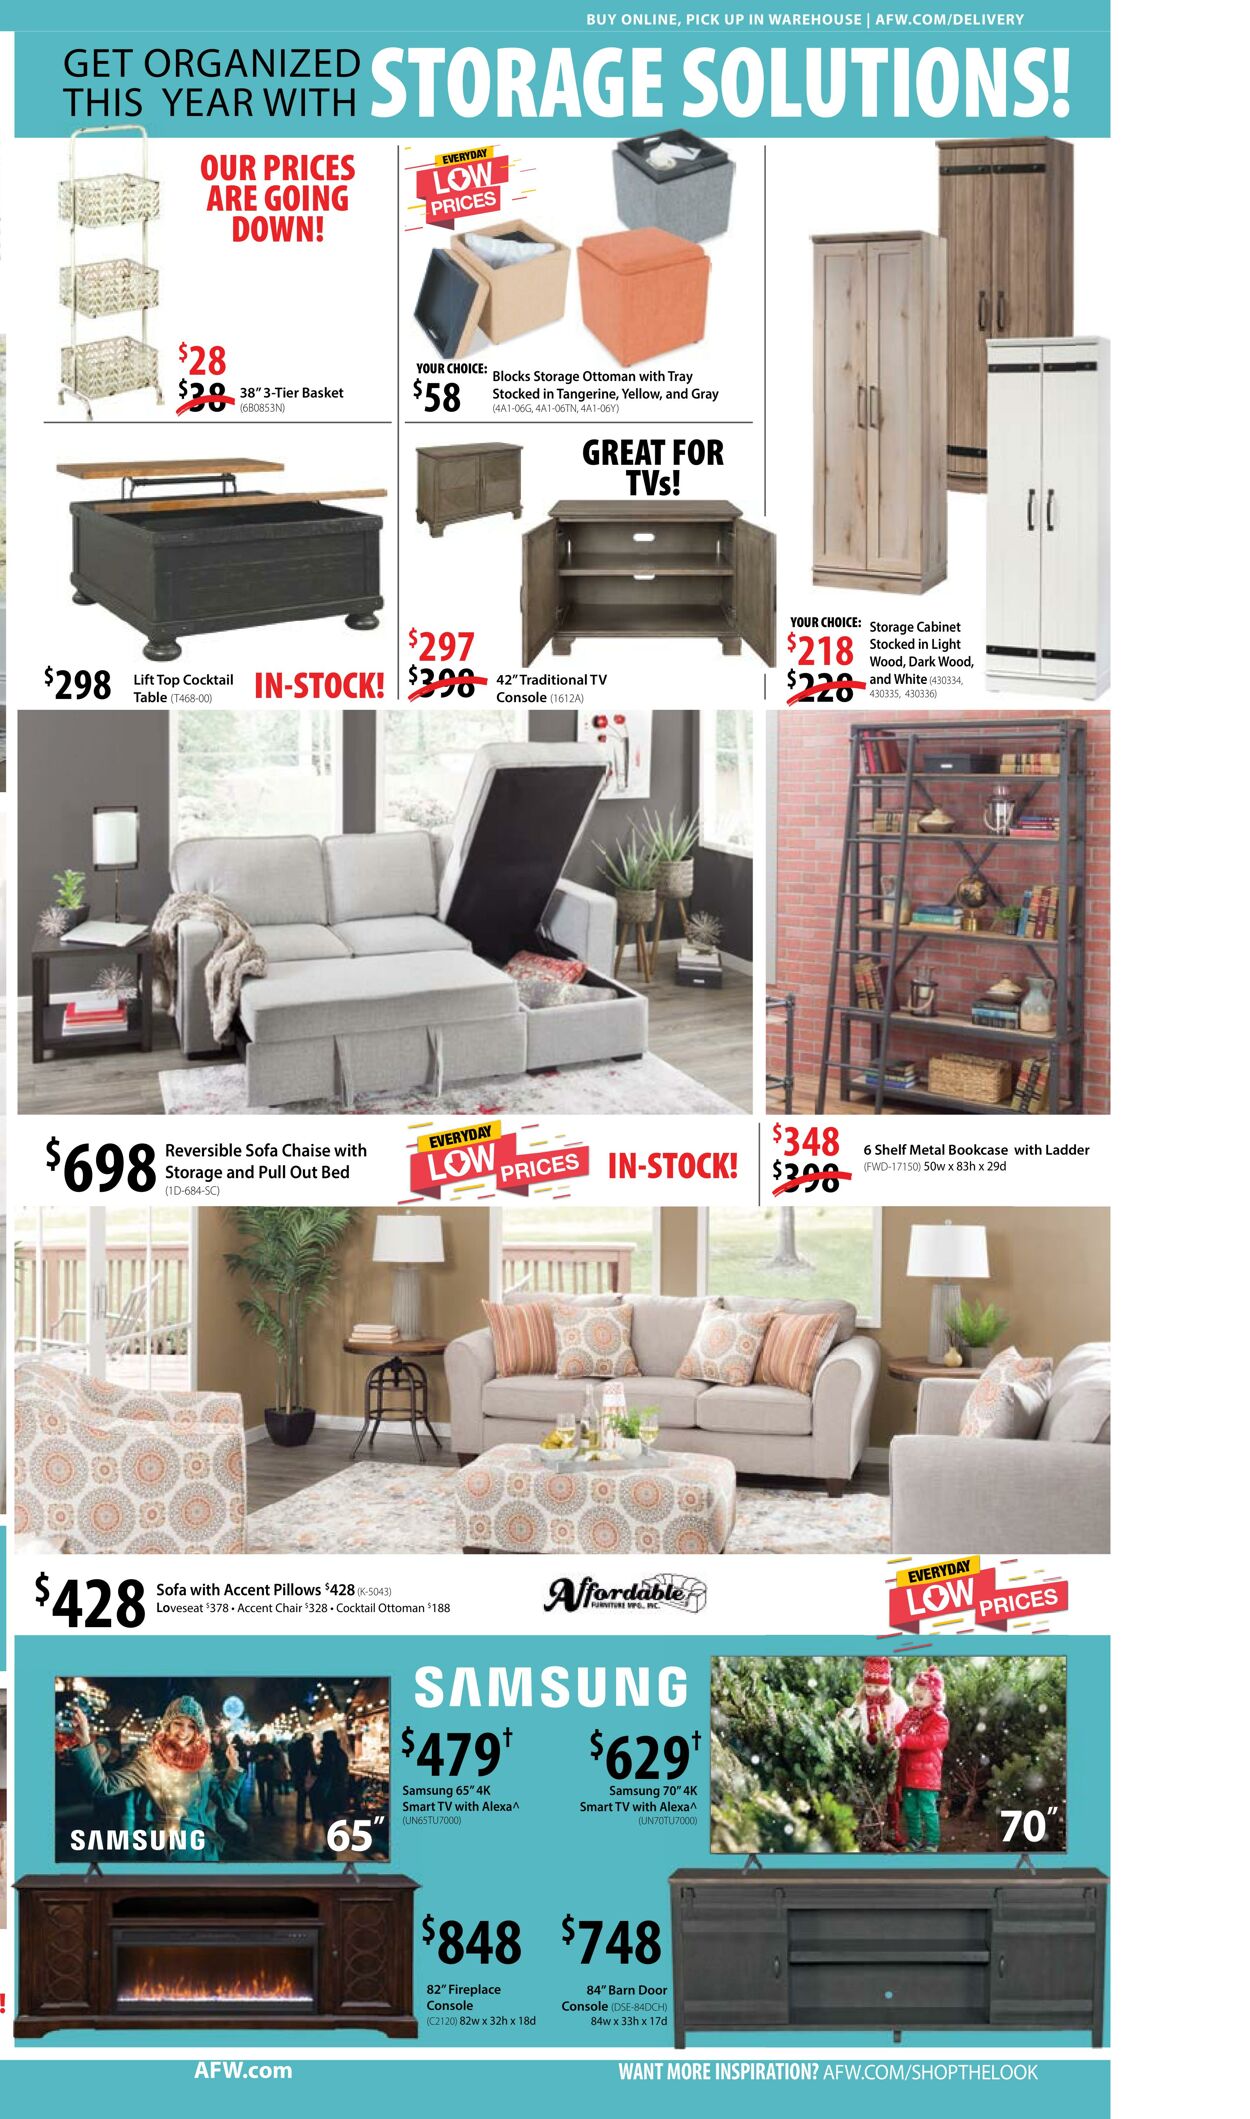 Weekly ad American Furniture Warehouse 01/01/2023 - 01/24/2023